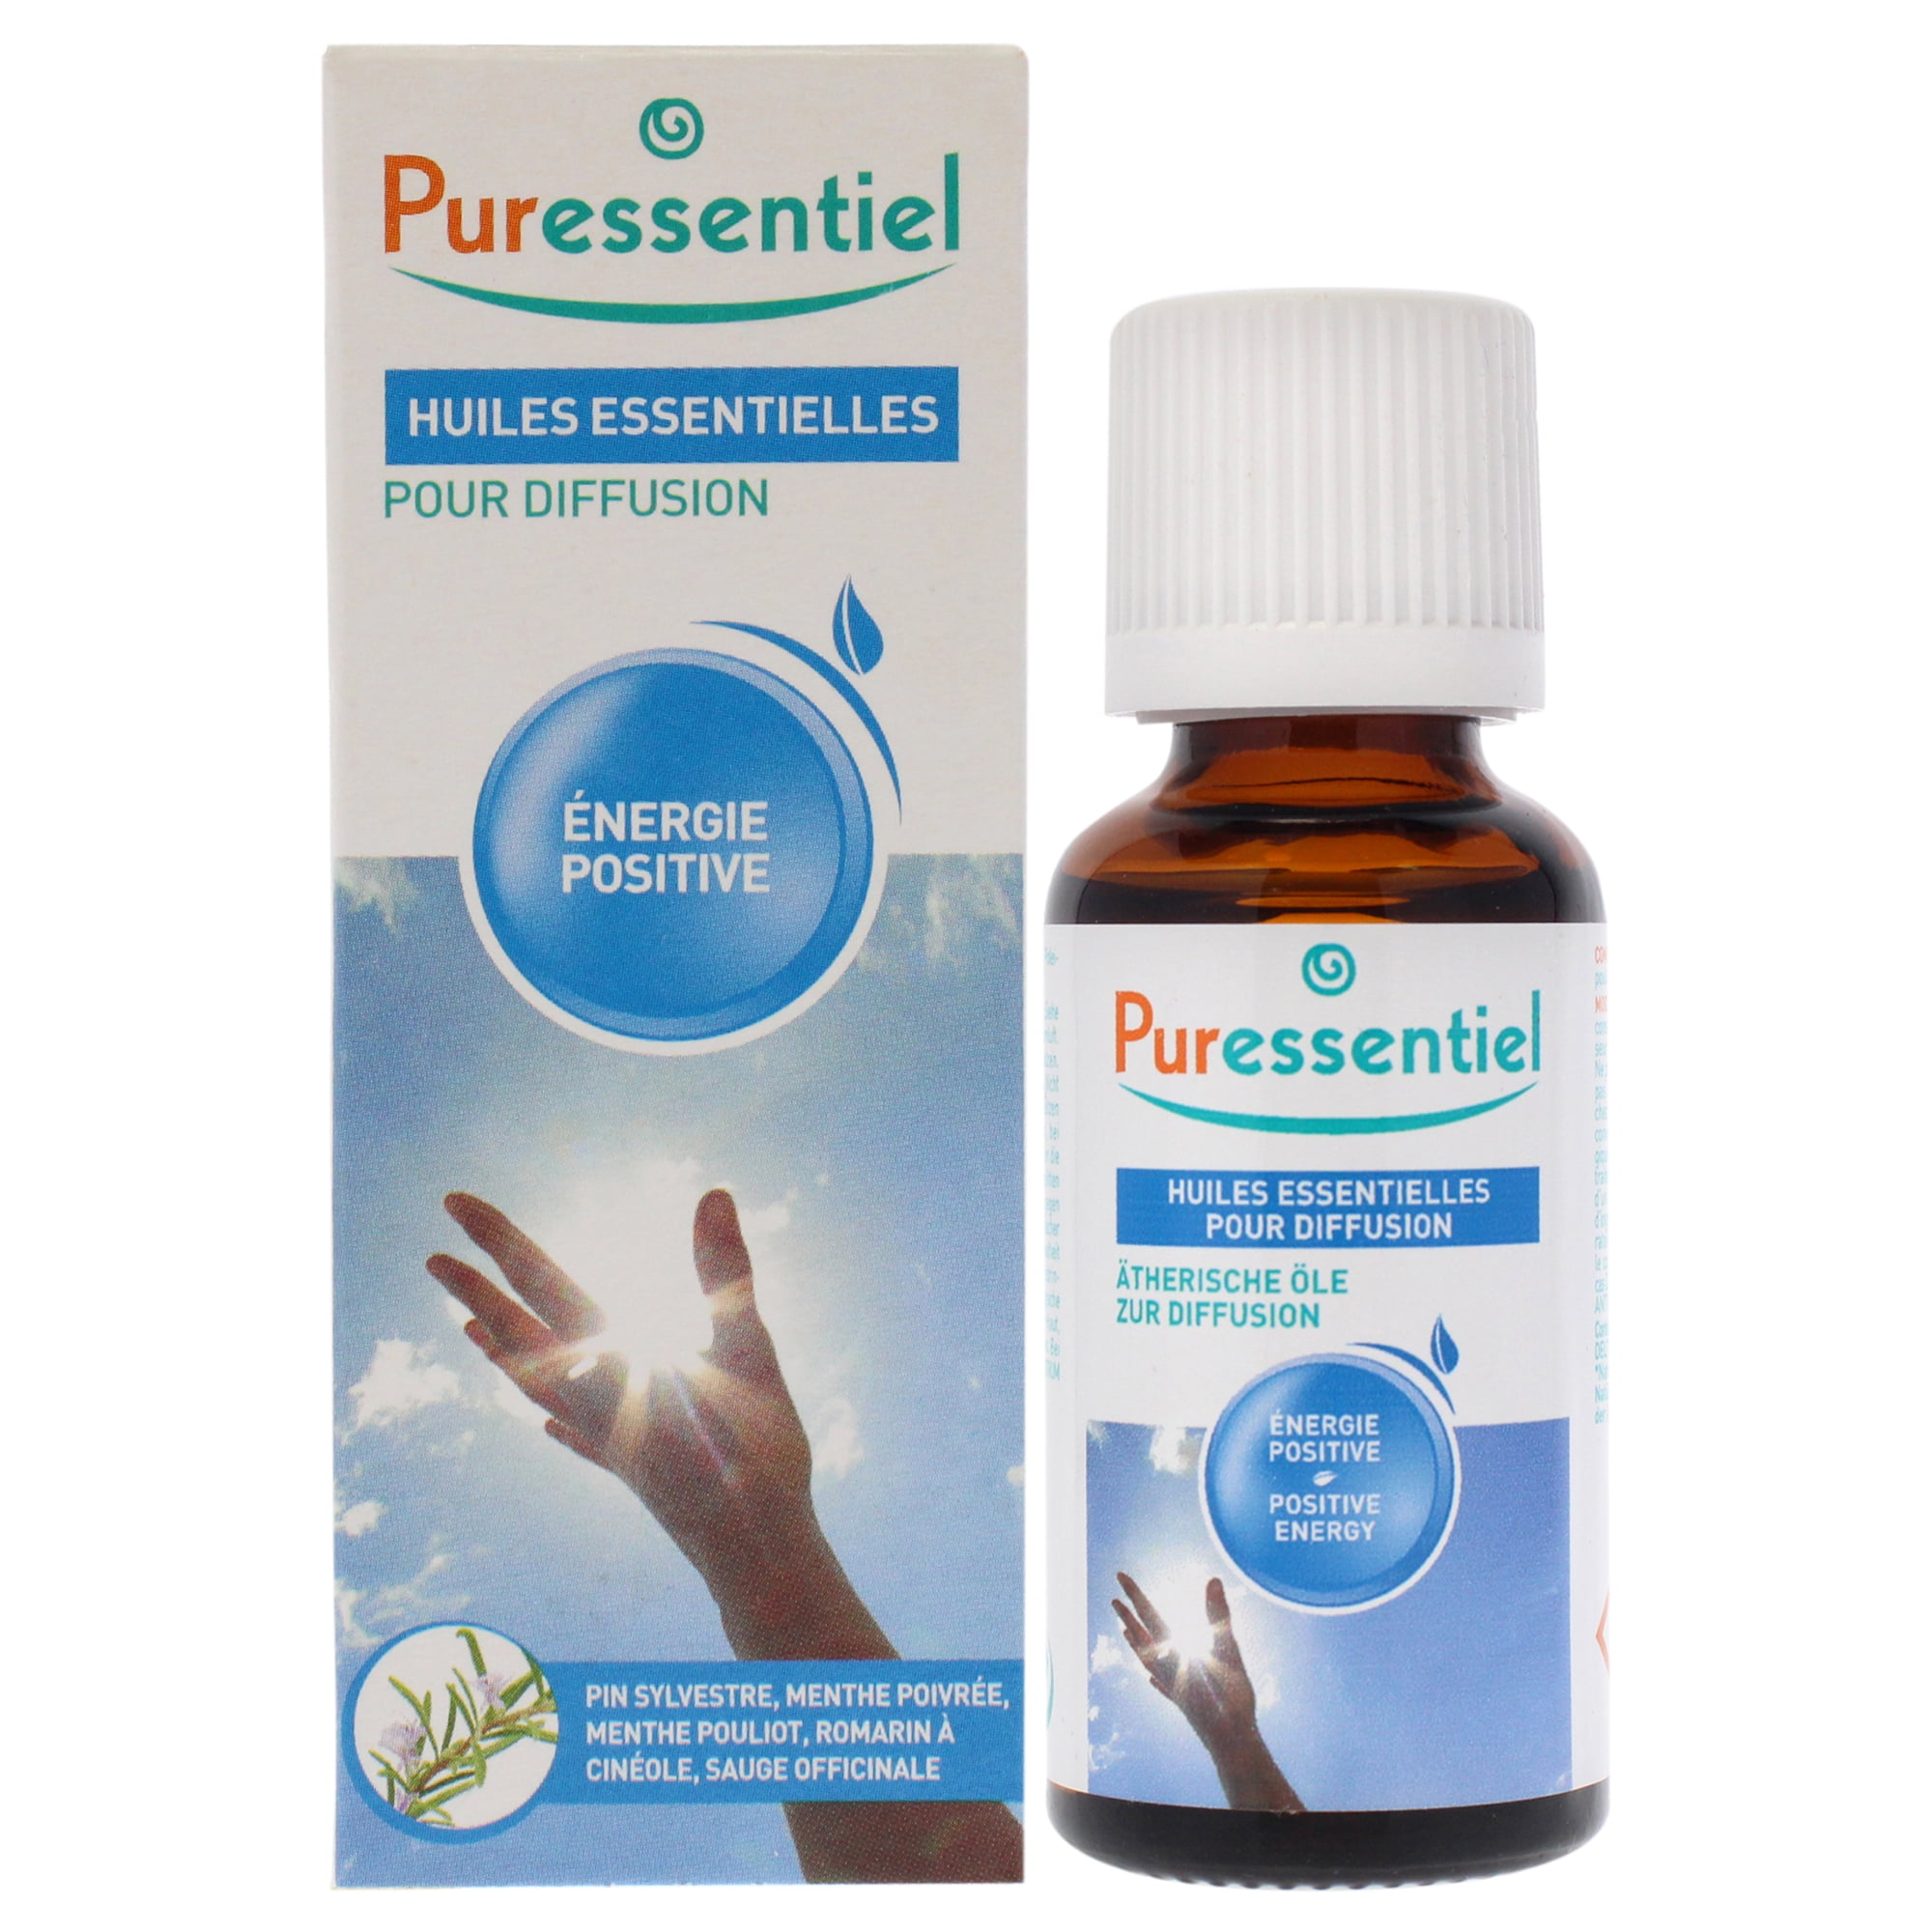 Puressentiel Diffusion Essential Oil - Positive Energy Blend, 1.01